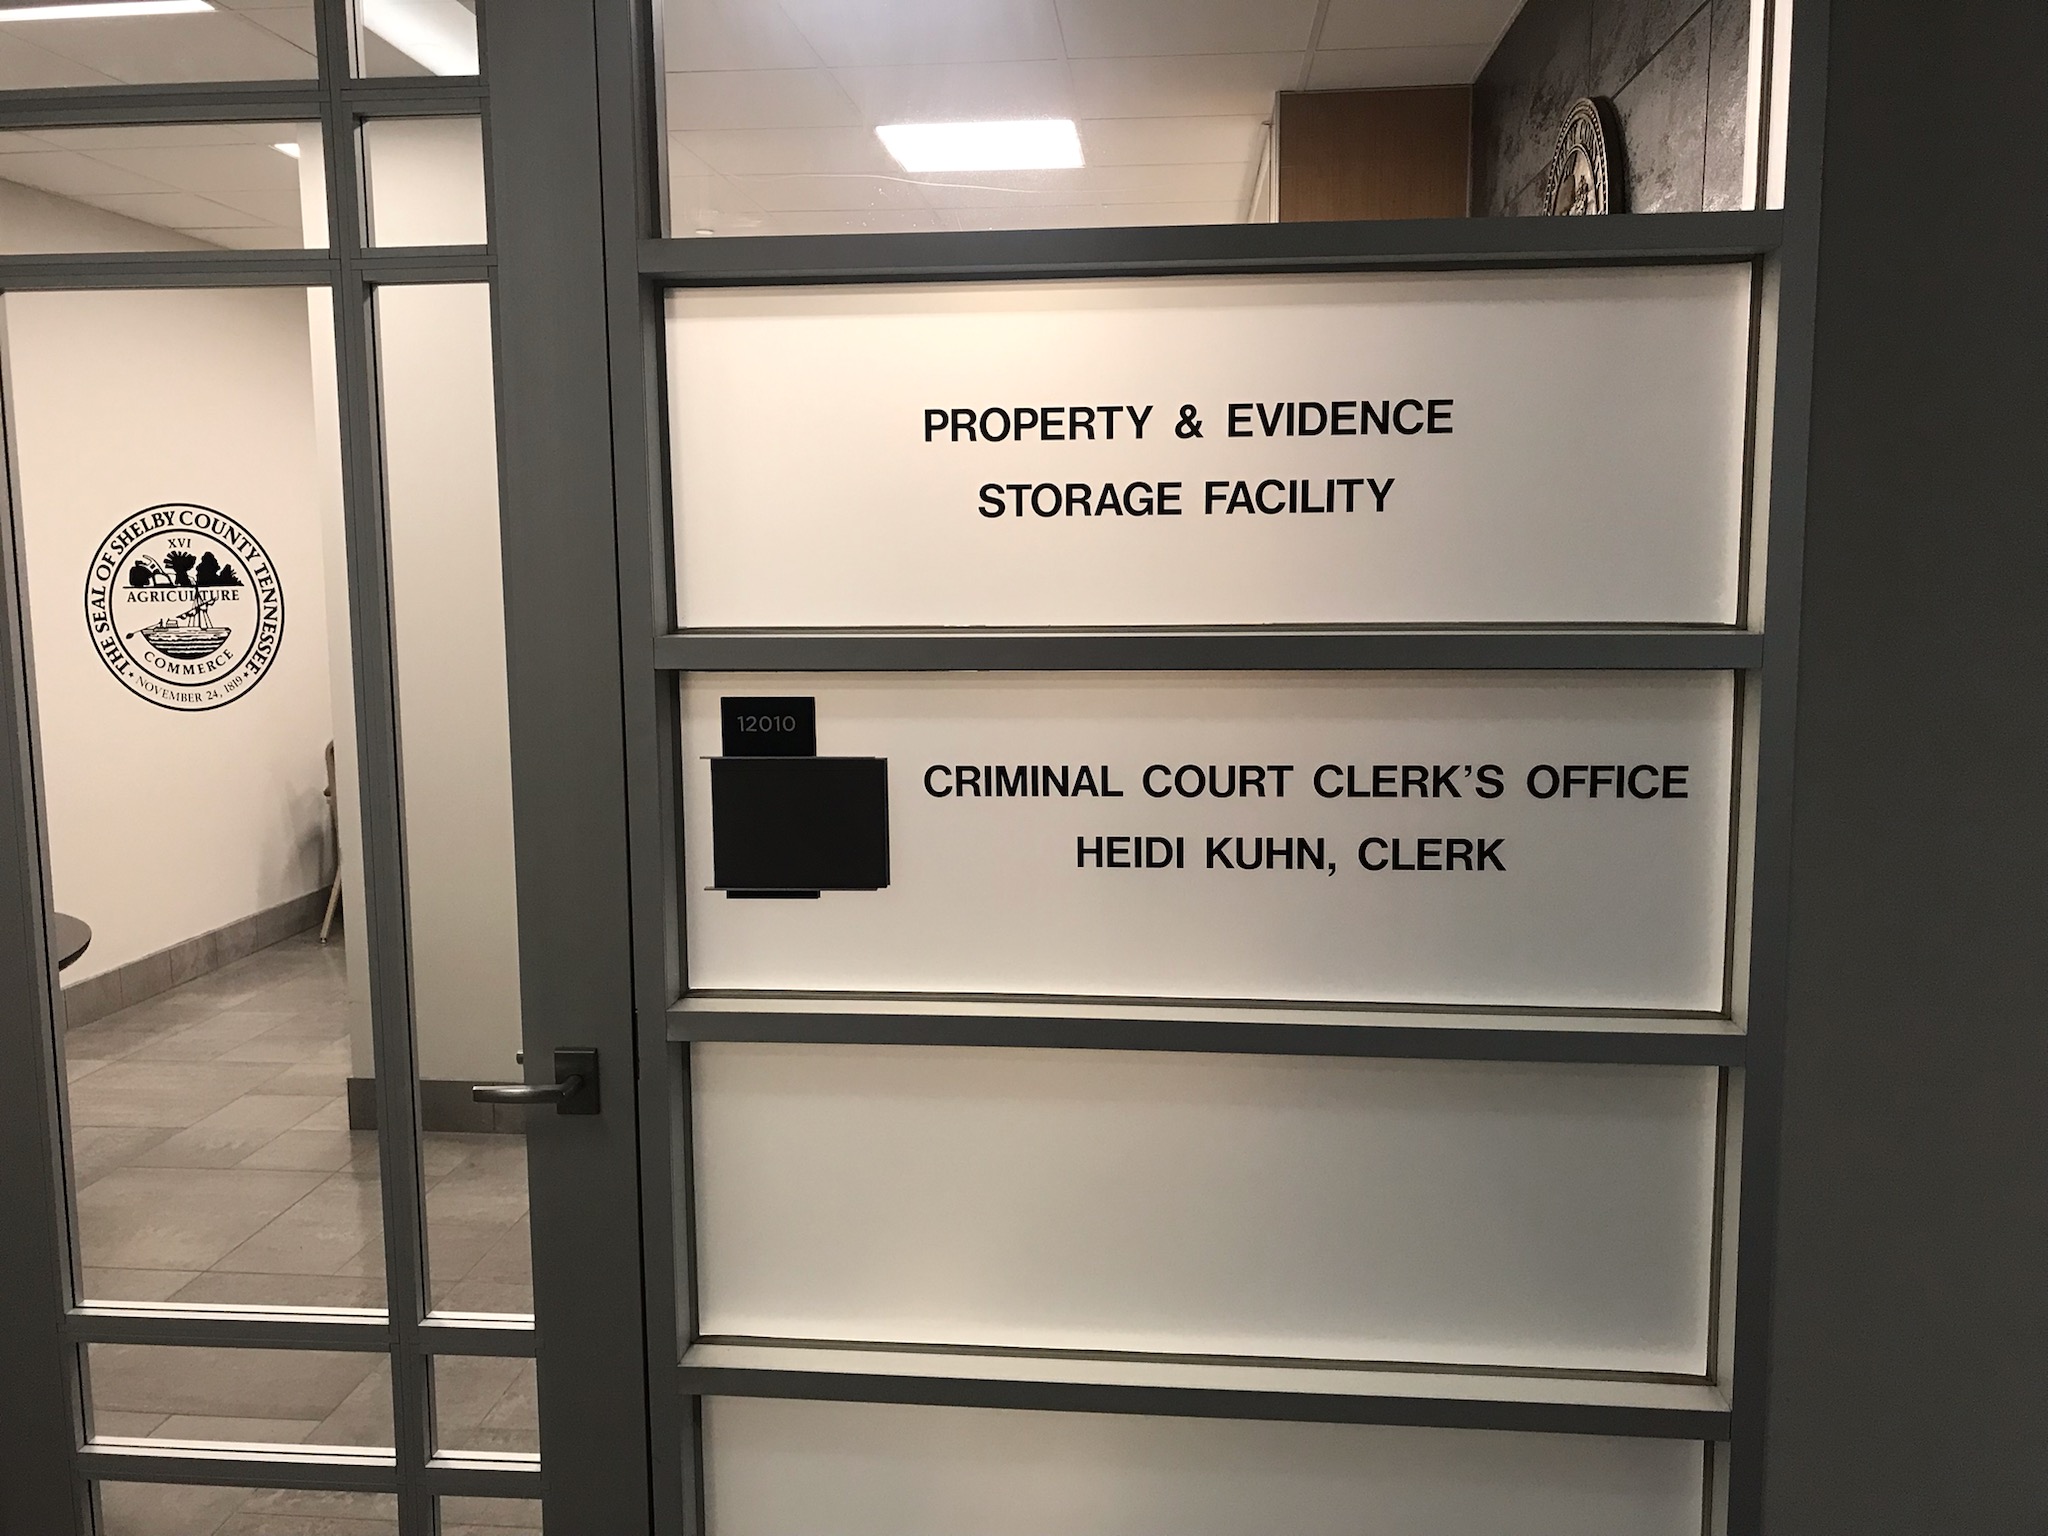 Former Shelby County Criminal Court Clerk Staffer Stole Cash from Evidence